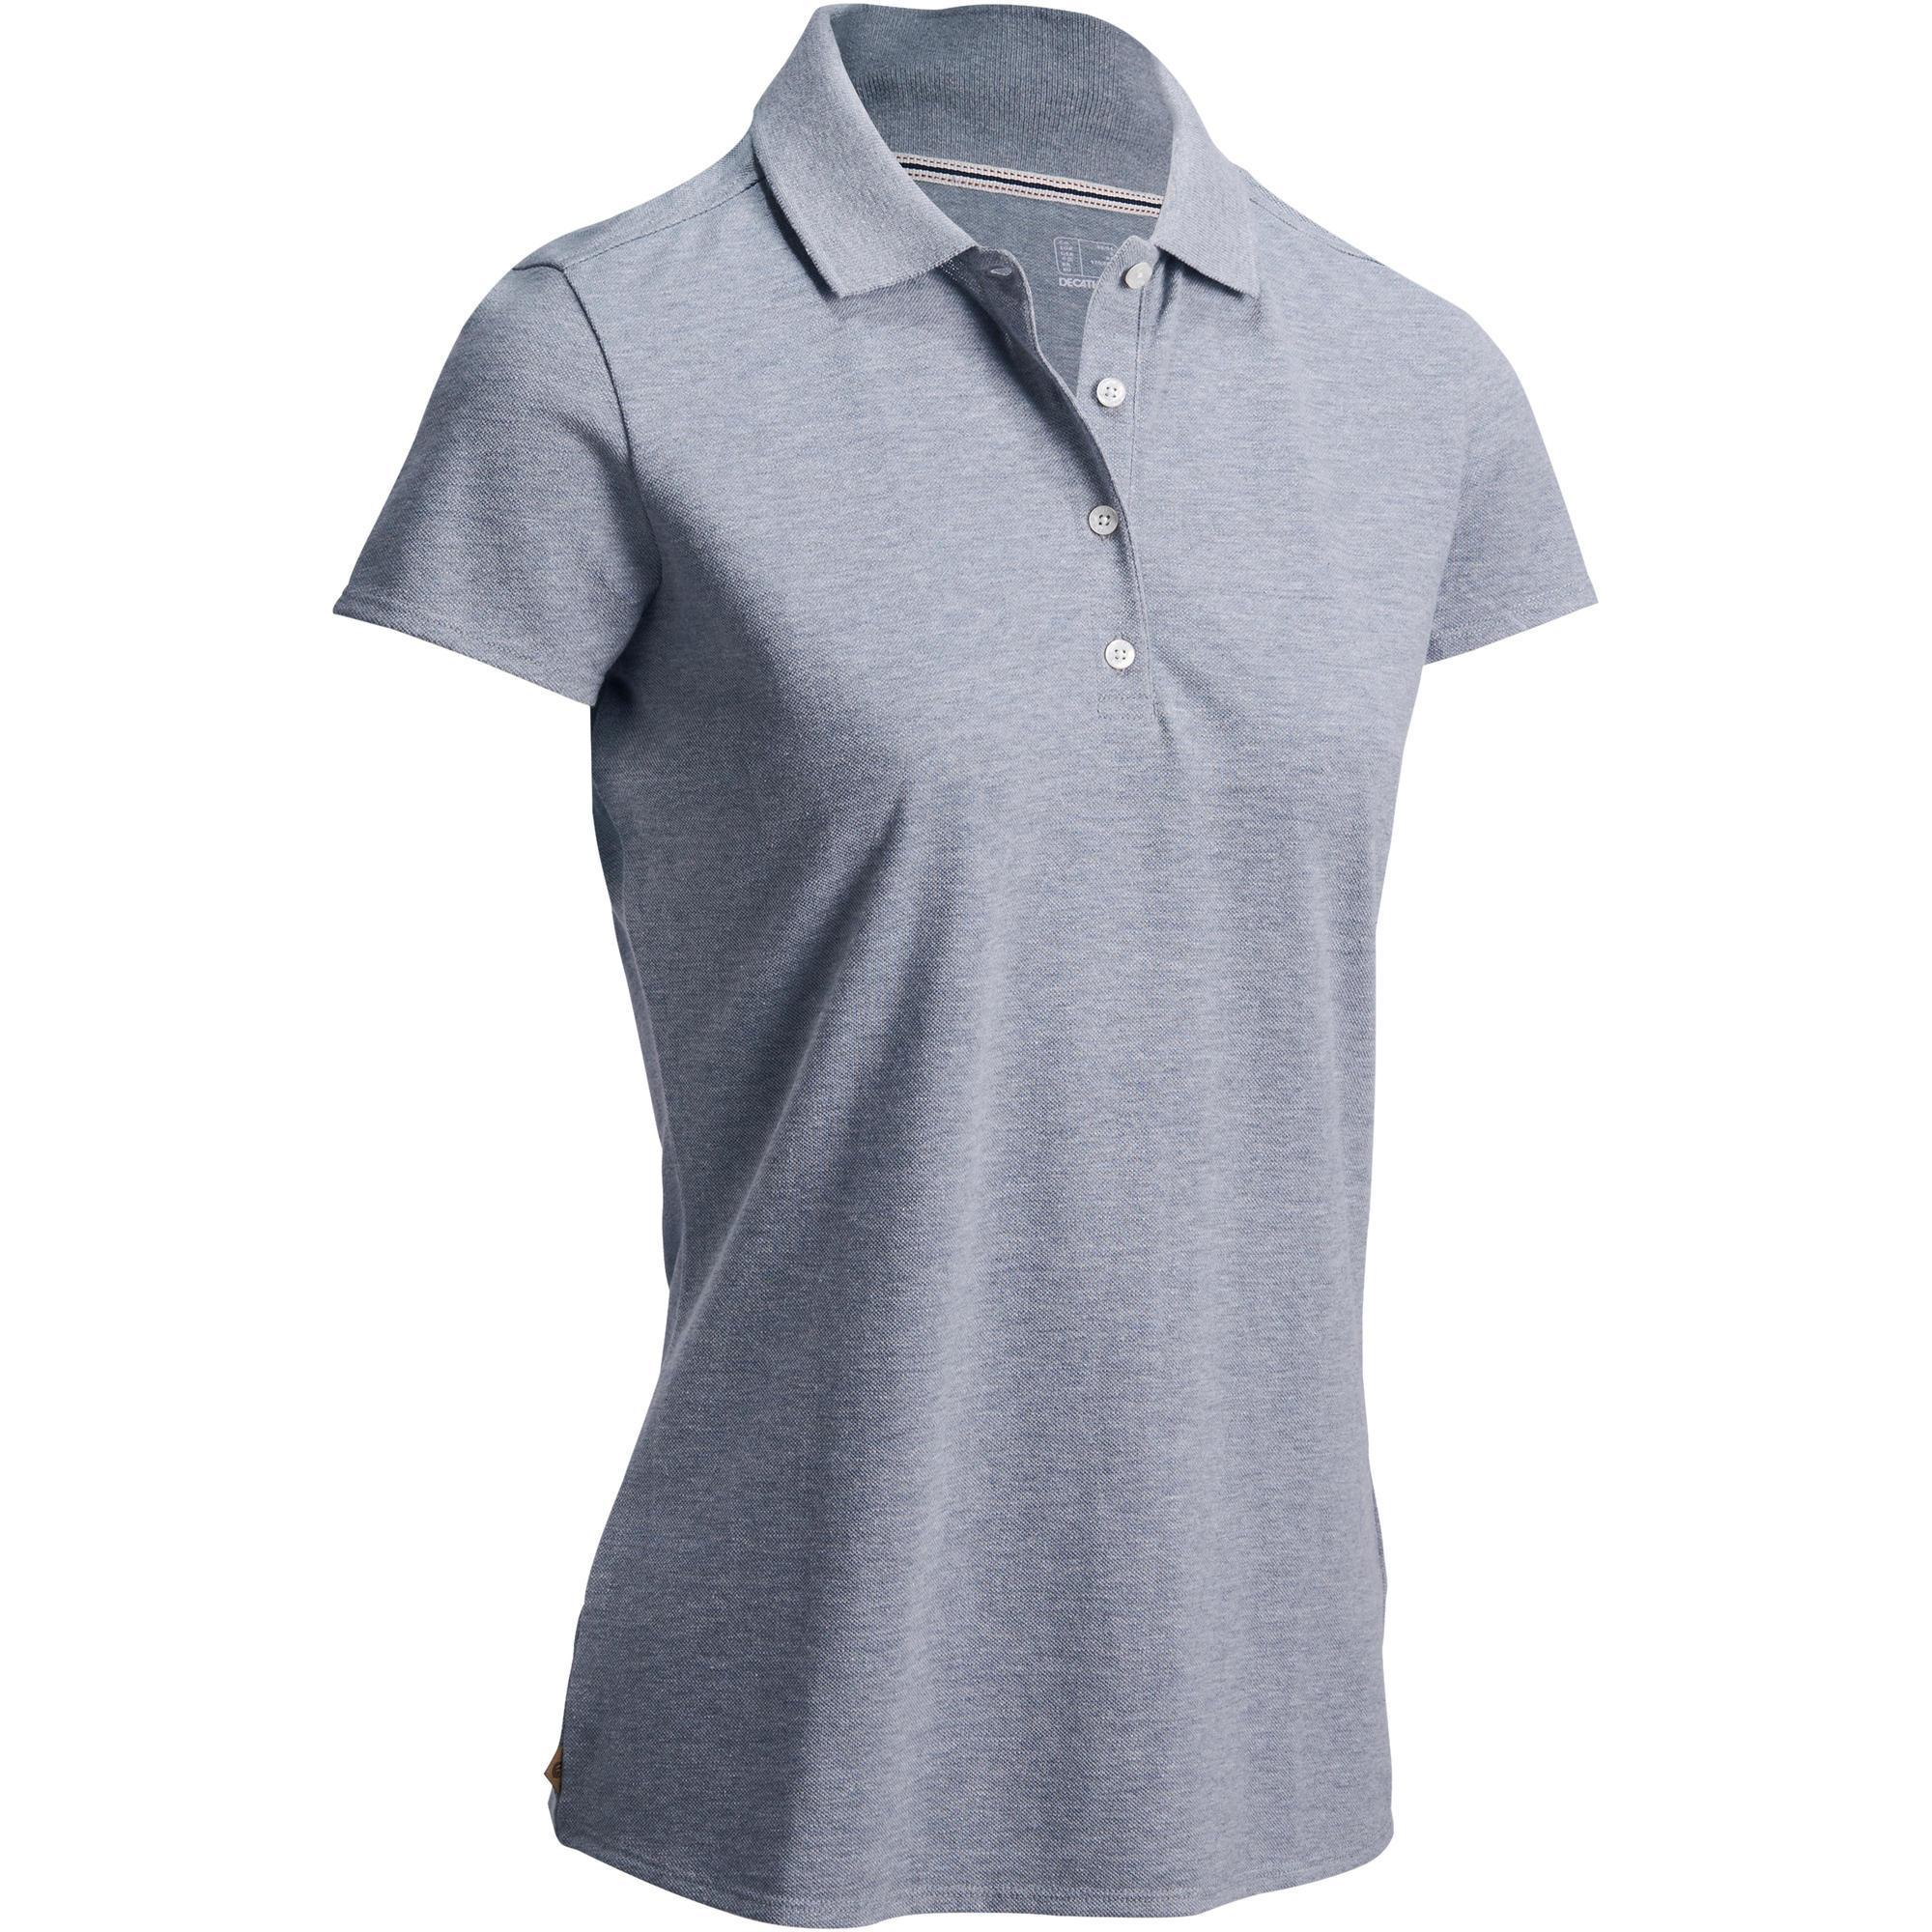 women's golf polo shirts